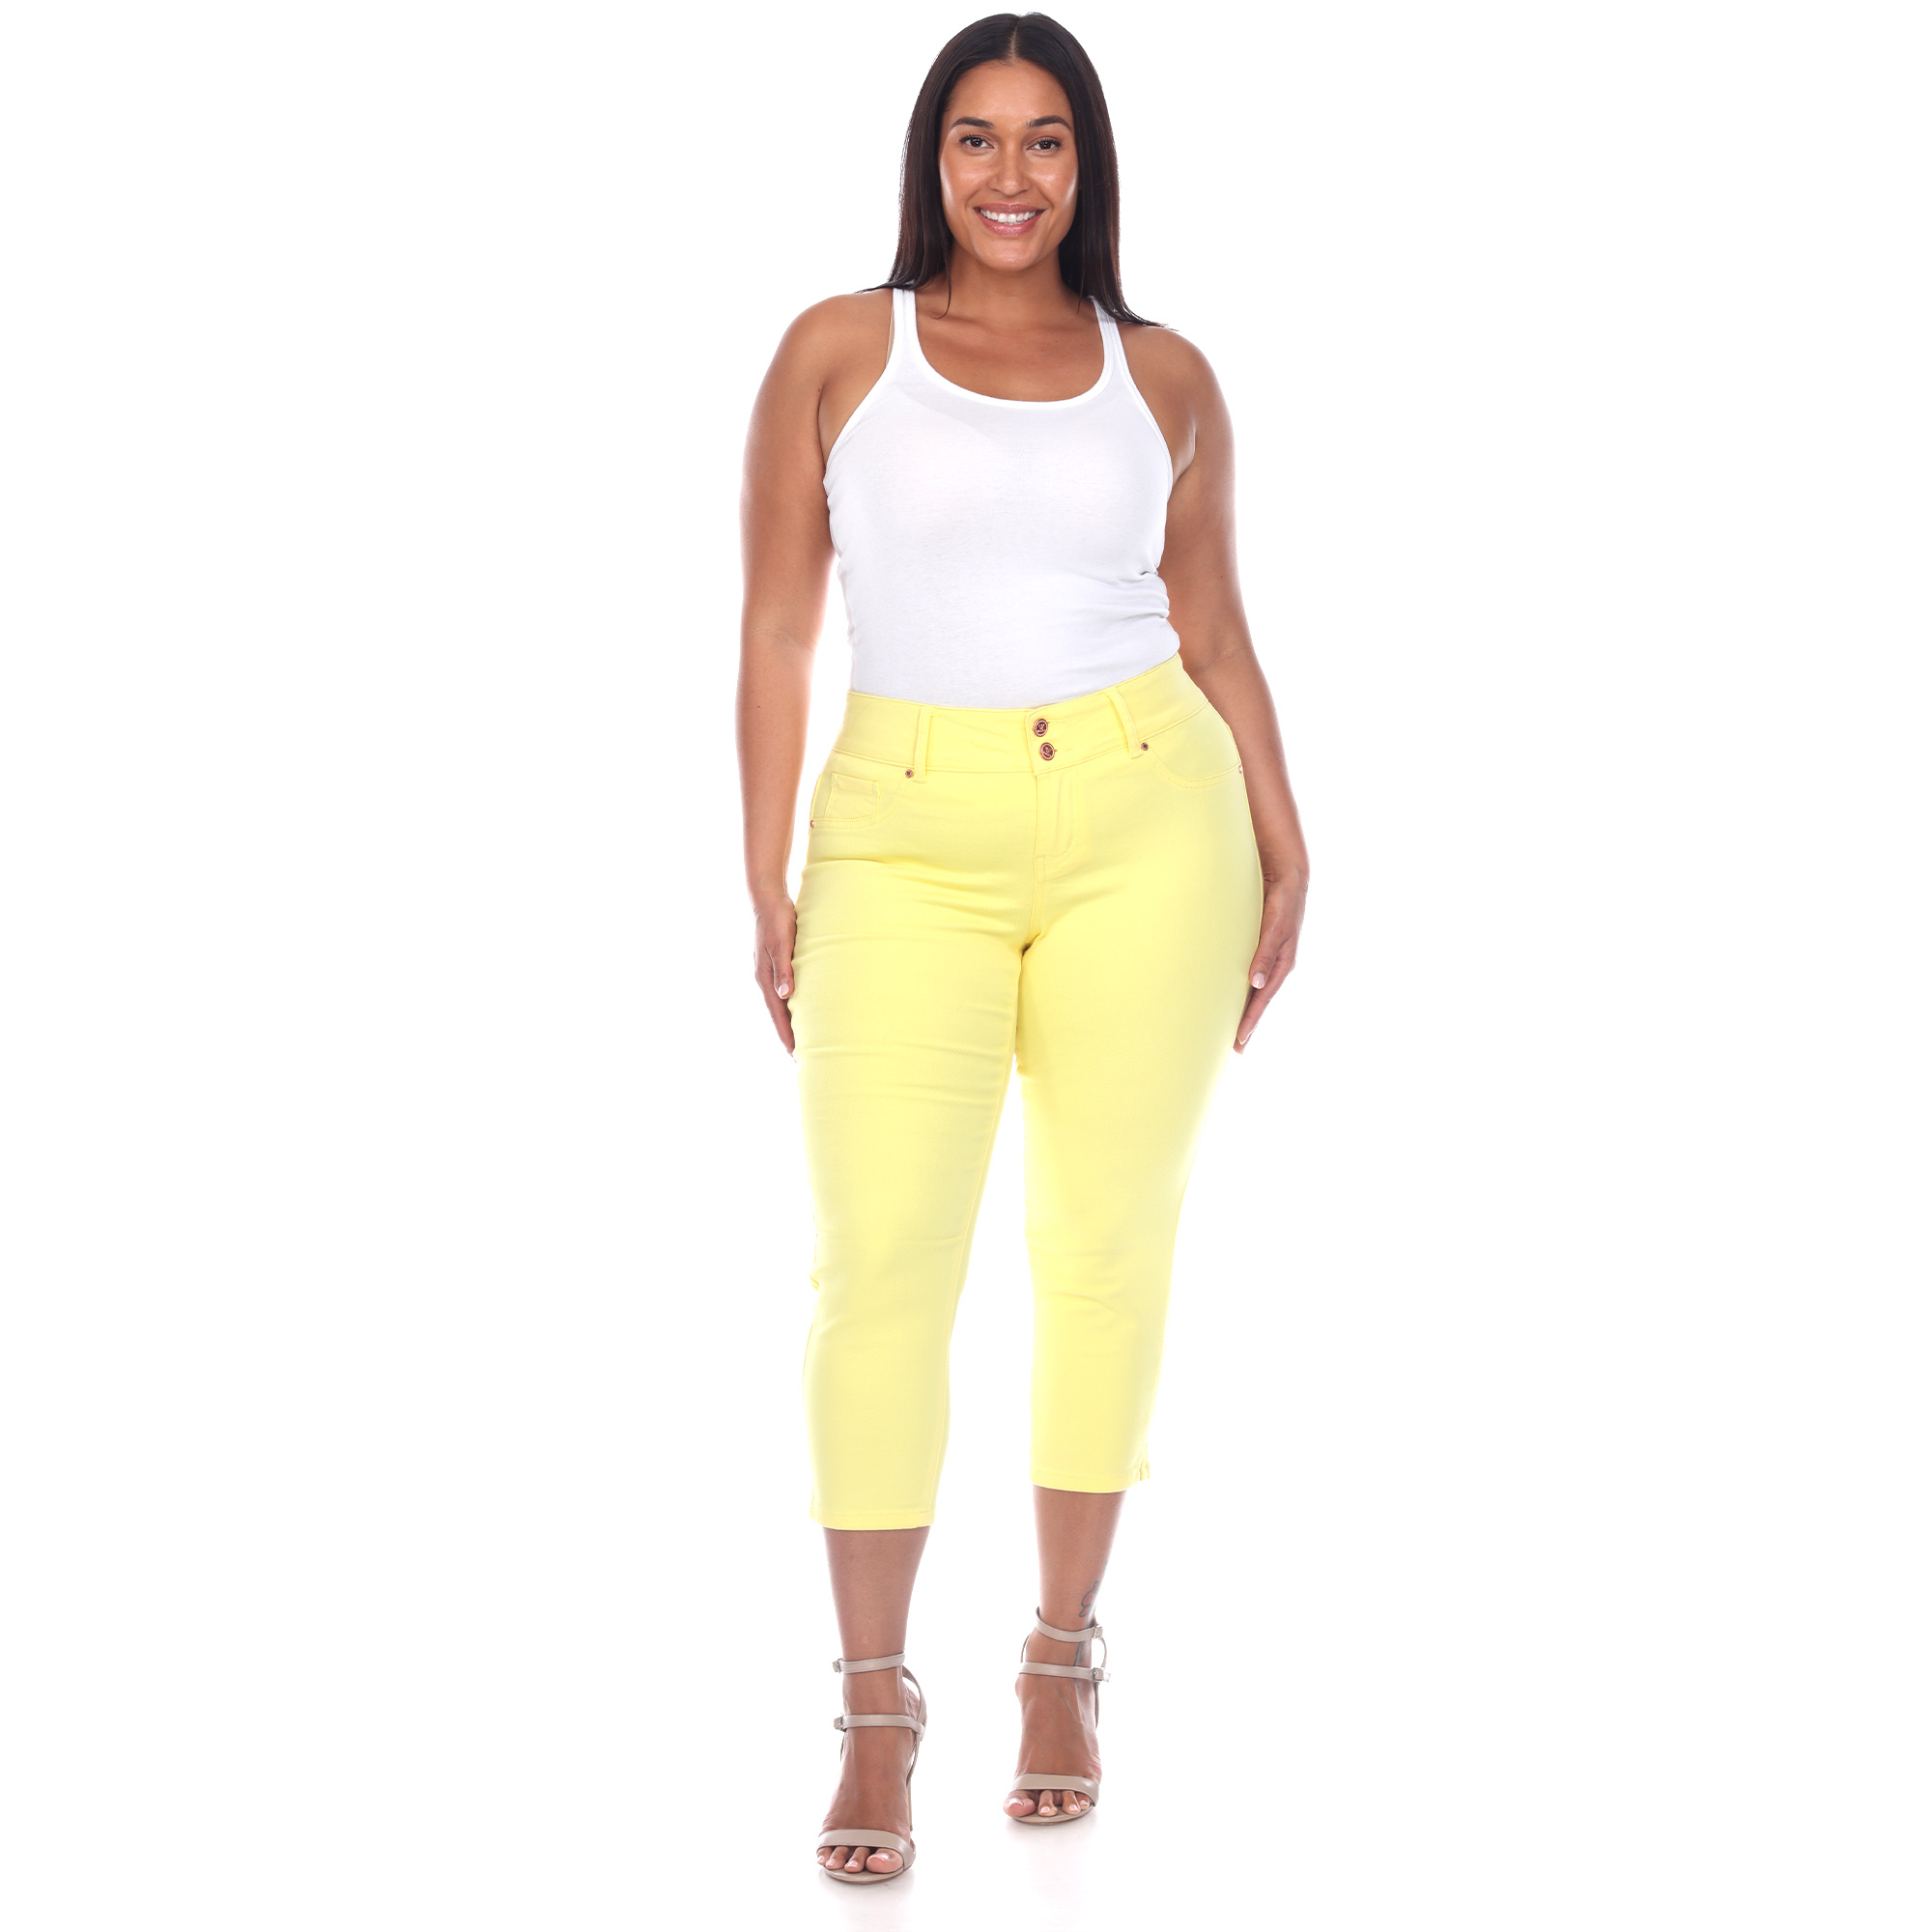 White Mark Womenâs Capri Jeans - Yellow, 18